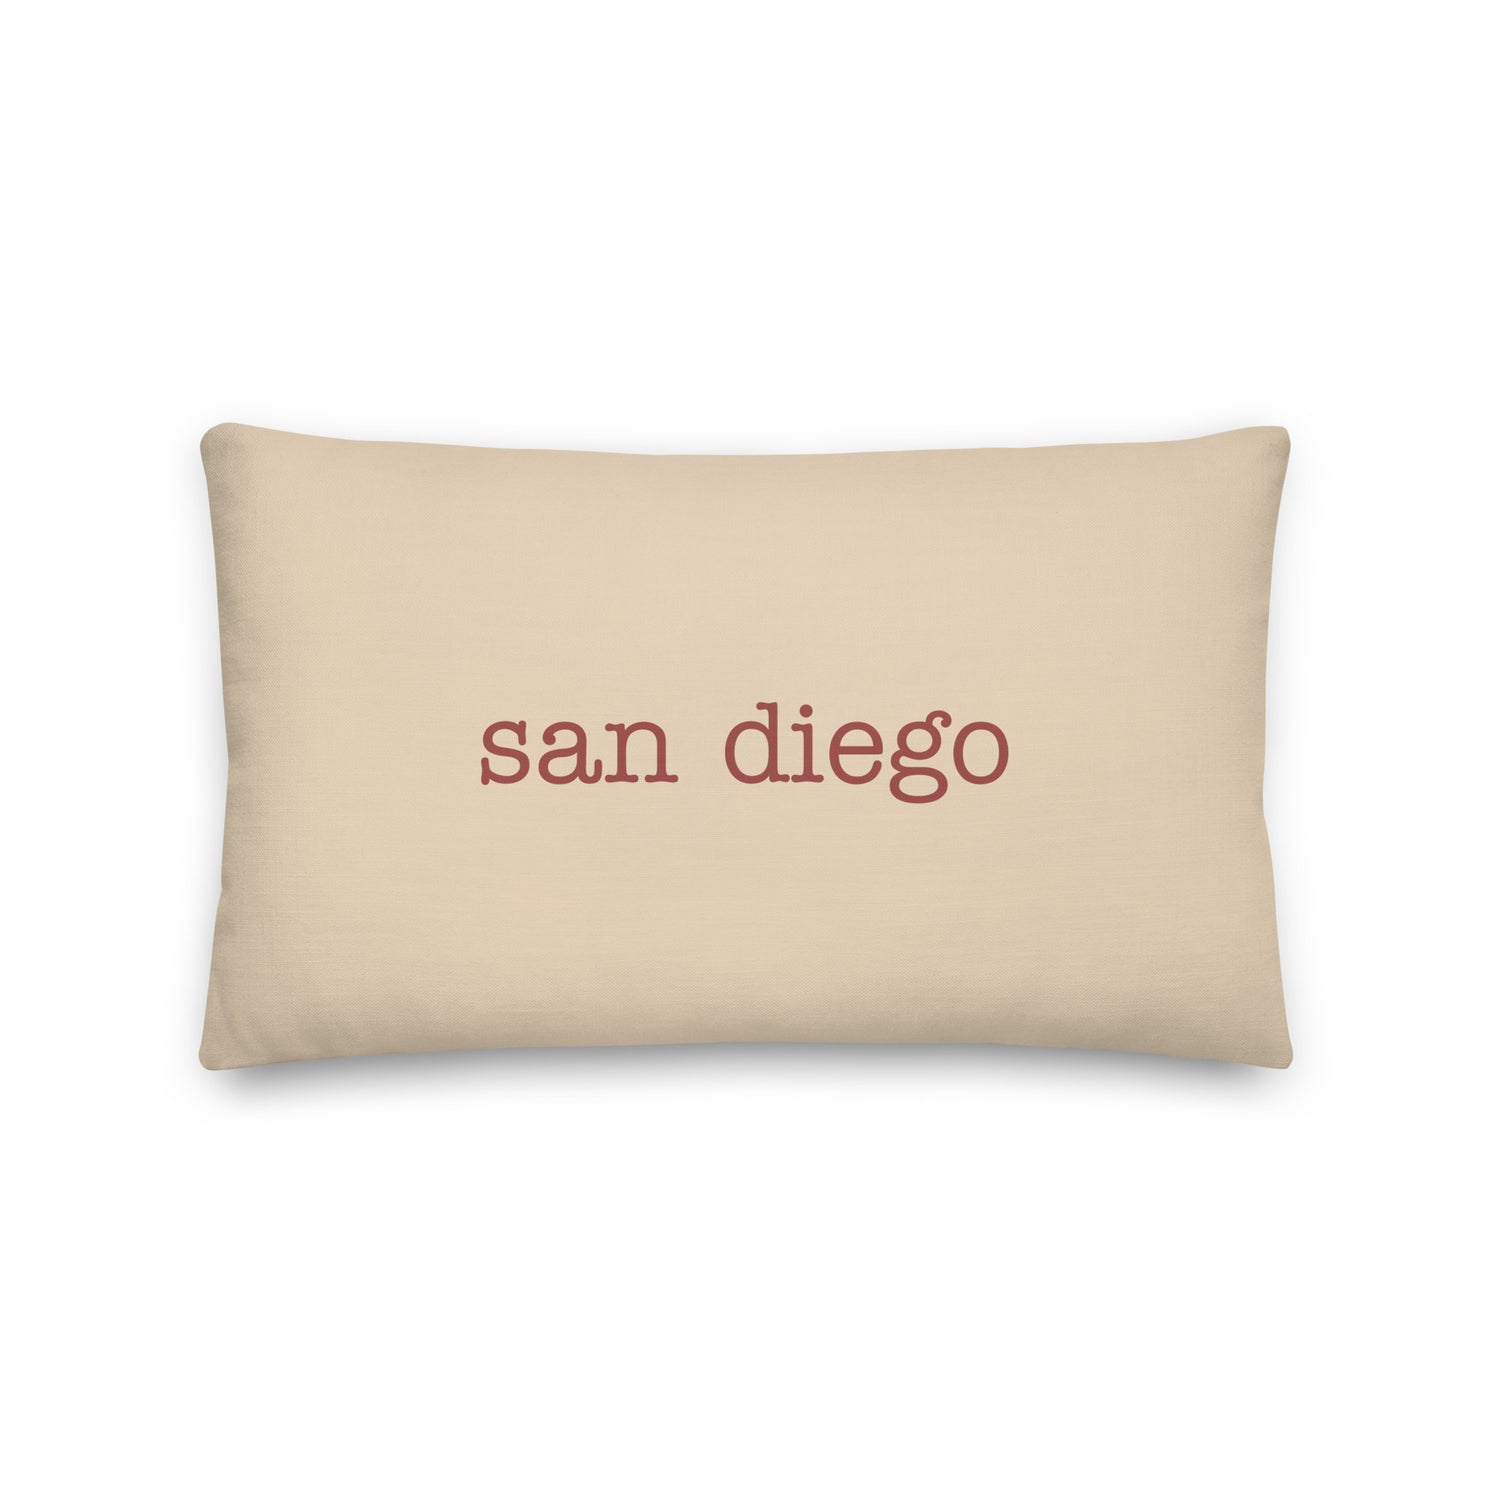 San Diego California Pillows and Blankets • SAN Airport Code